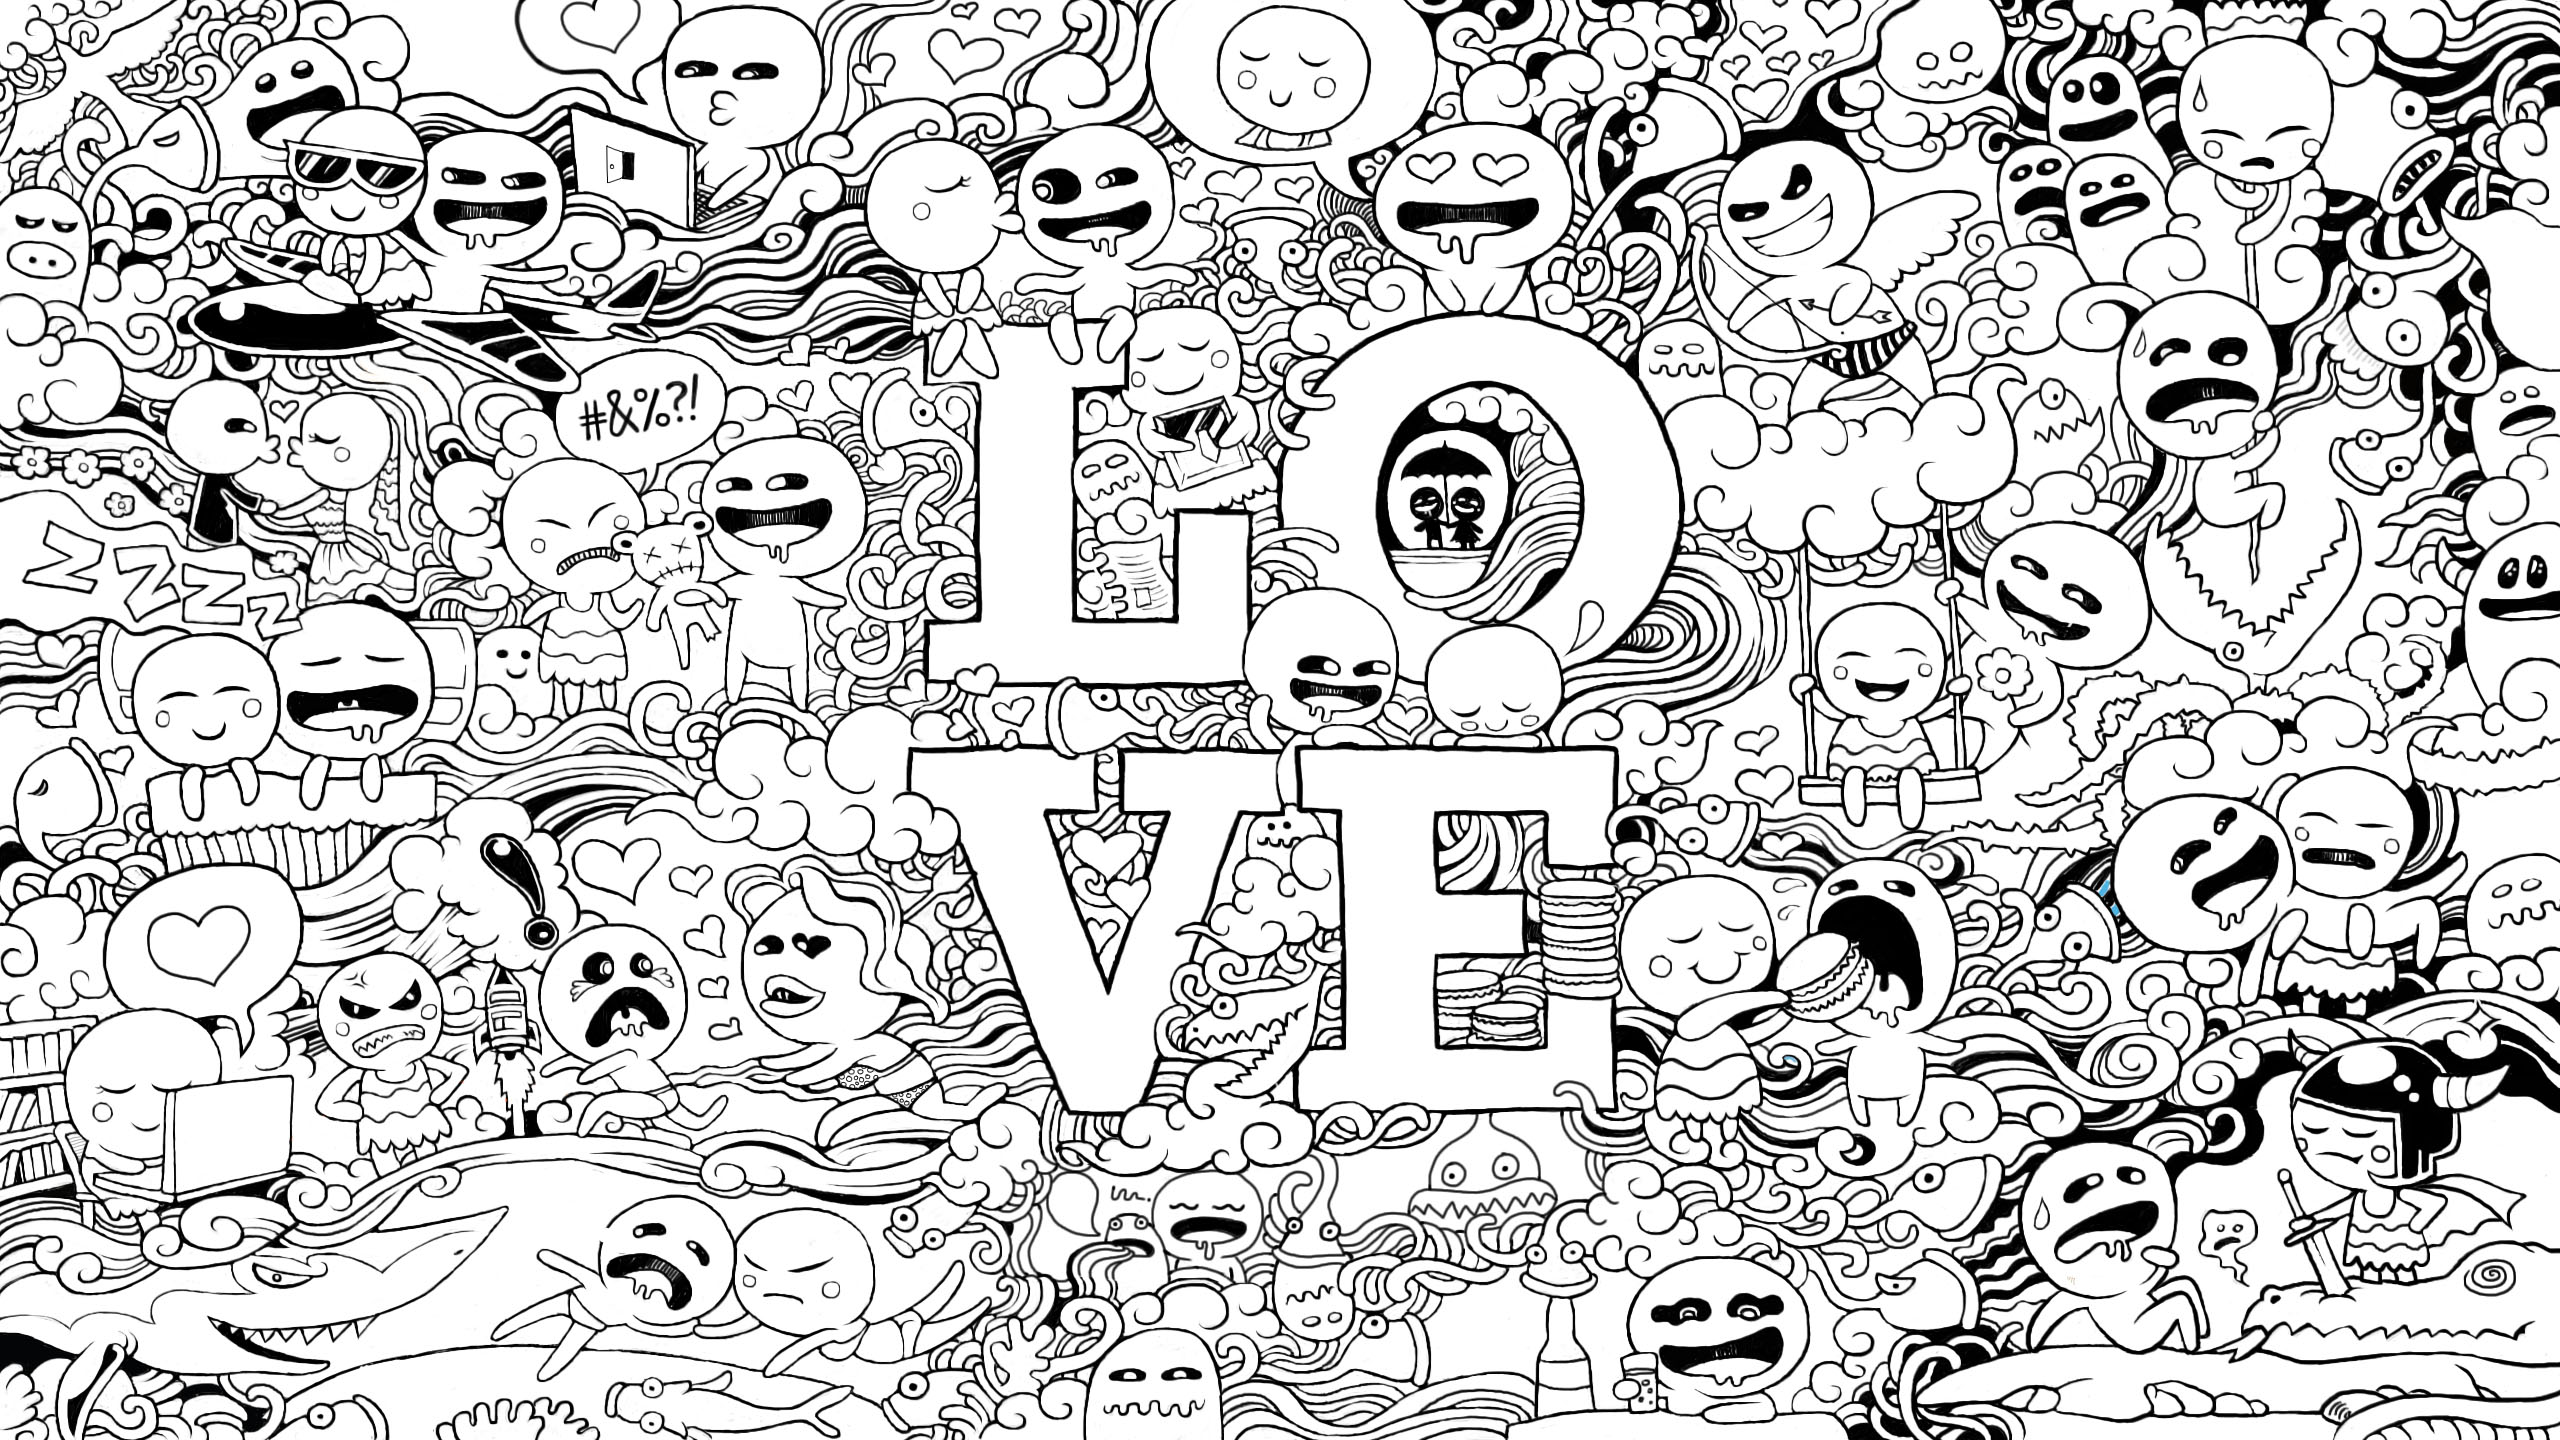 Wallpaper Freebie for February 2013 LOVE Doodles